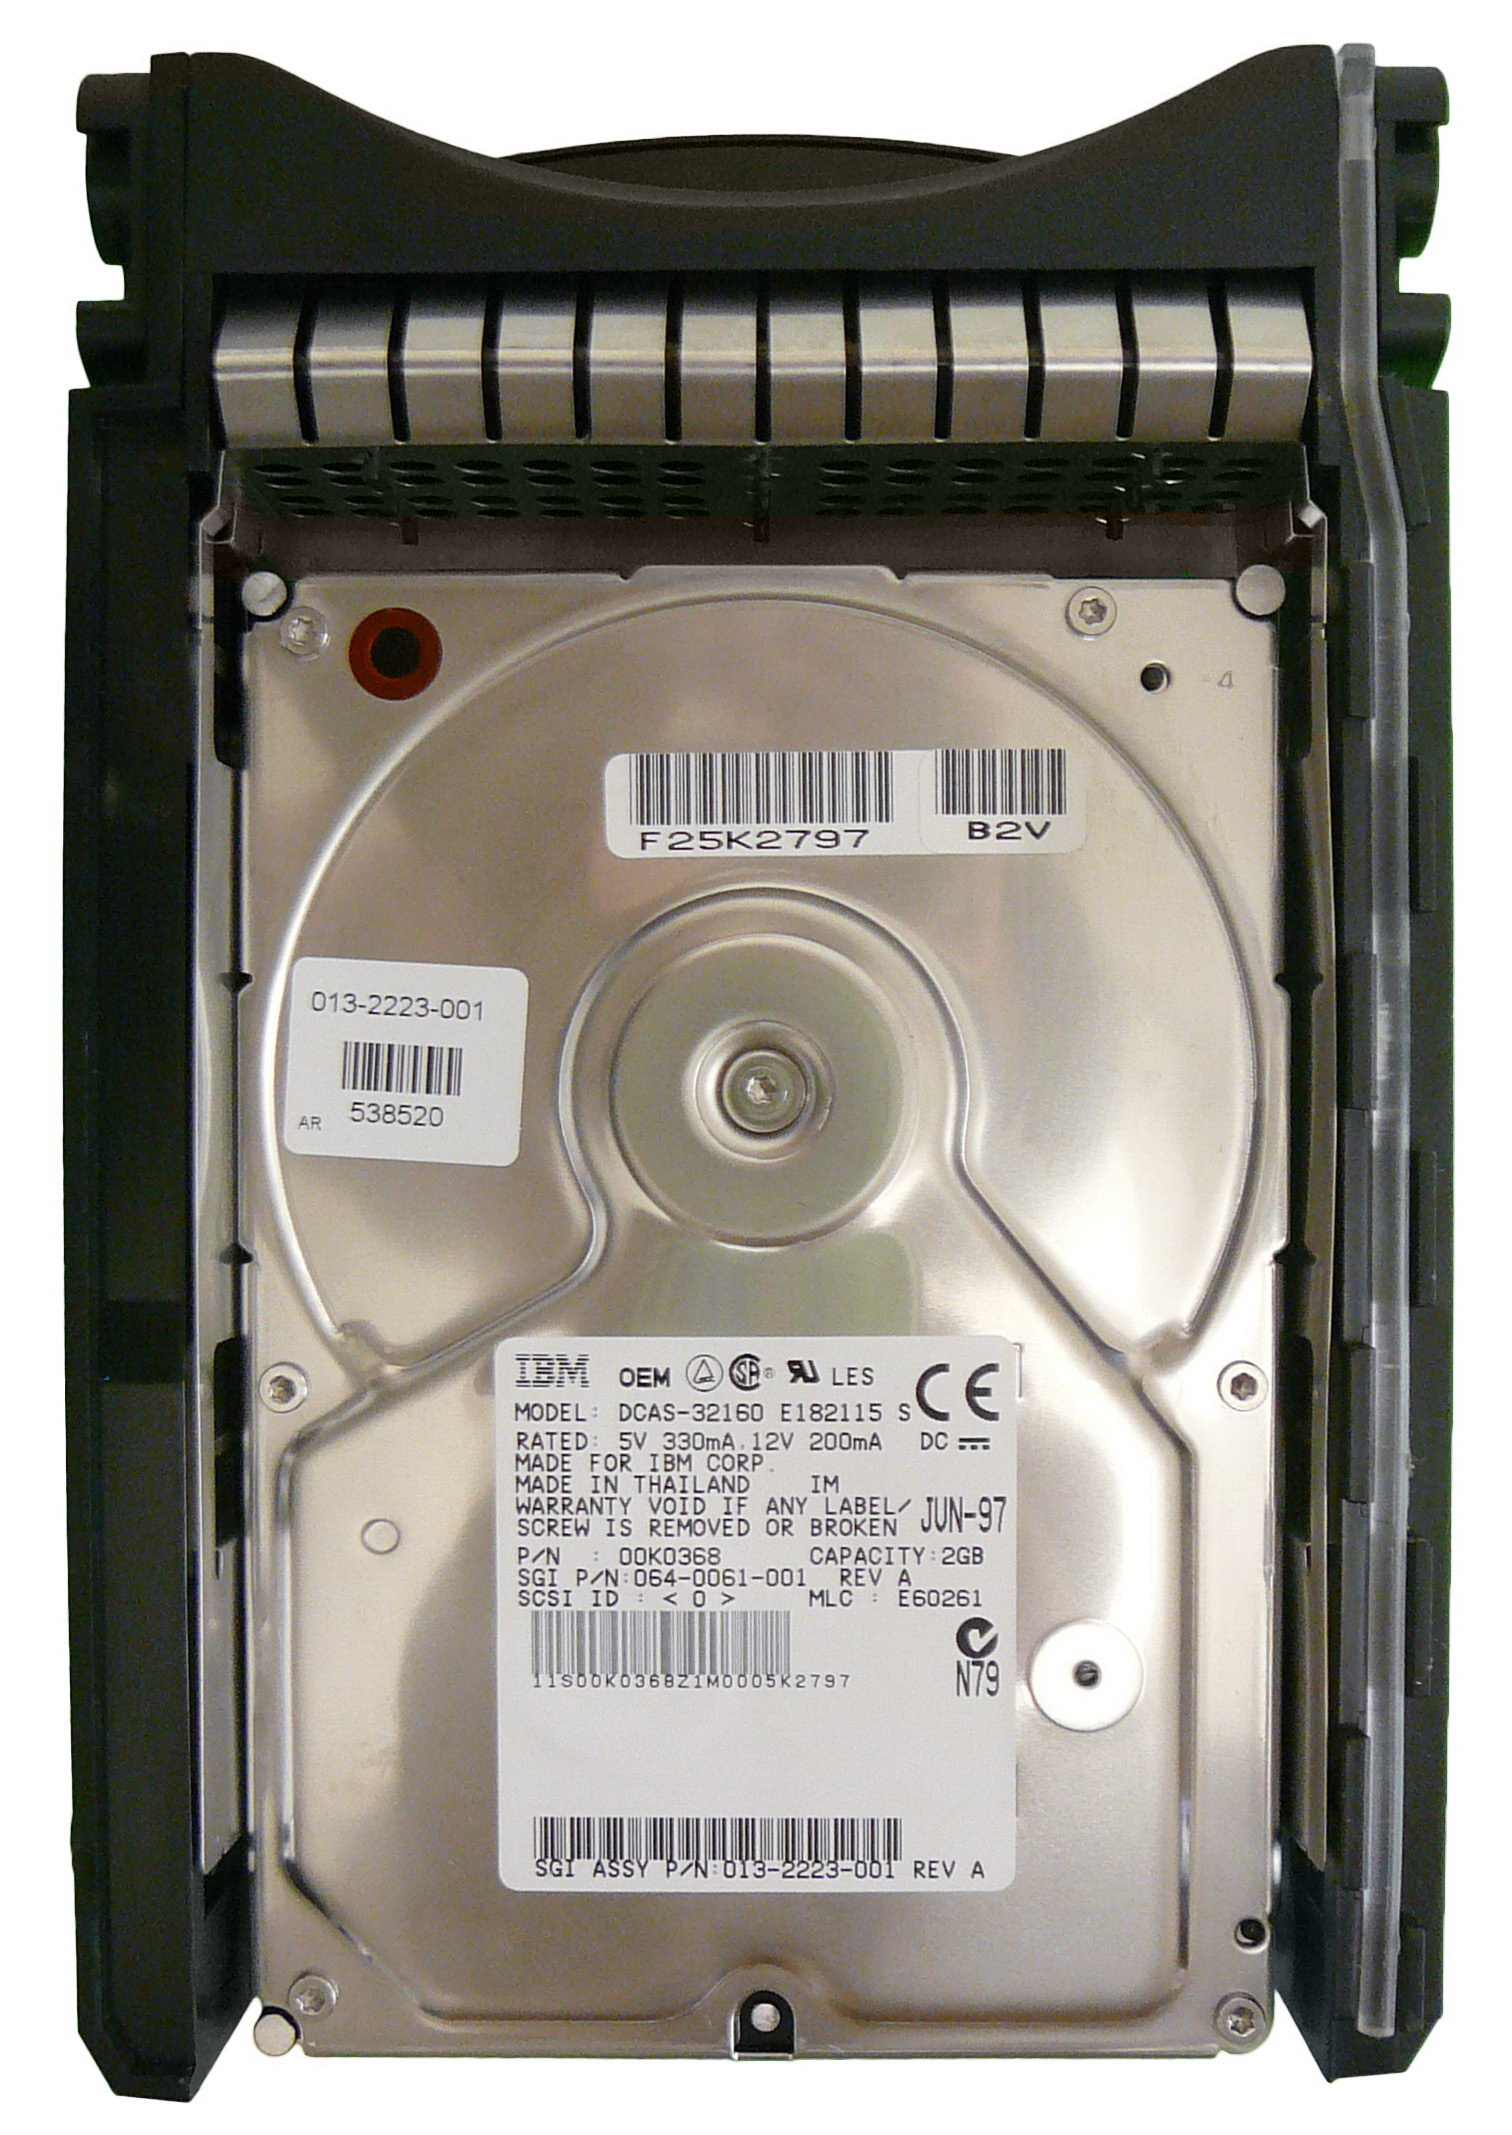 DCAS-32160-2 IBM Ultrastar 2ES 2.1GB 5400RPM Ultra SCSI 448KB Cache 3.5-inch Internal Hard Drive